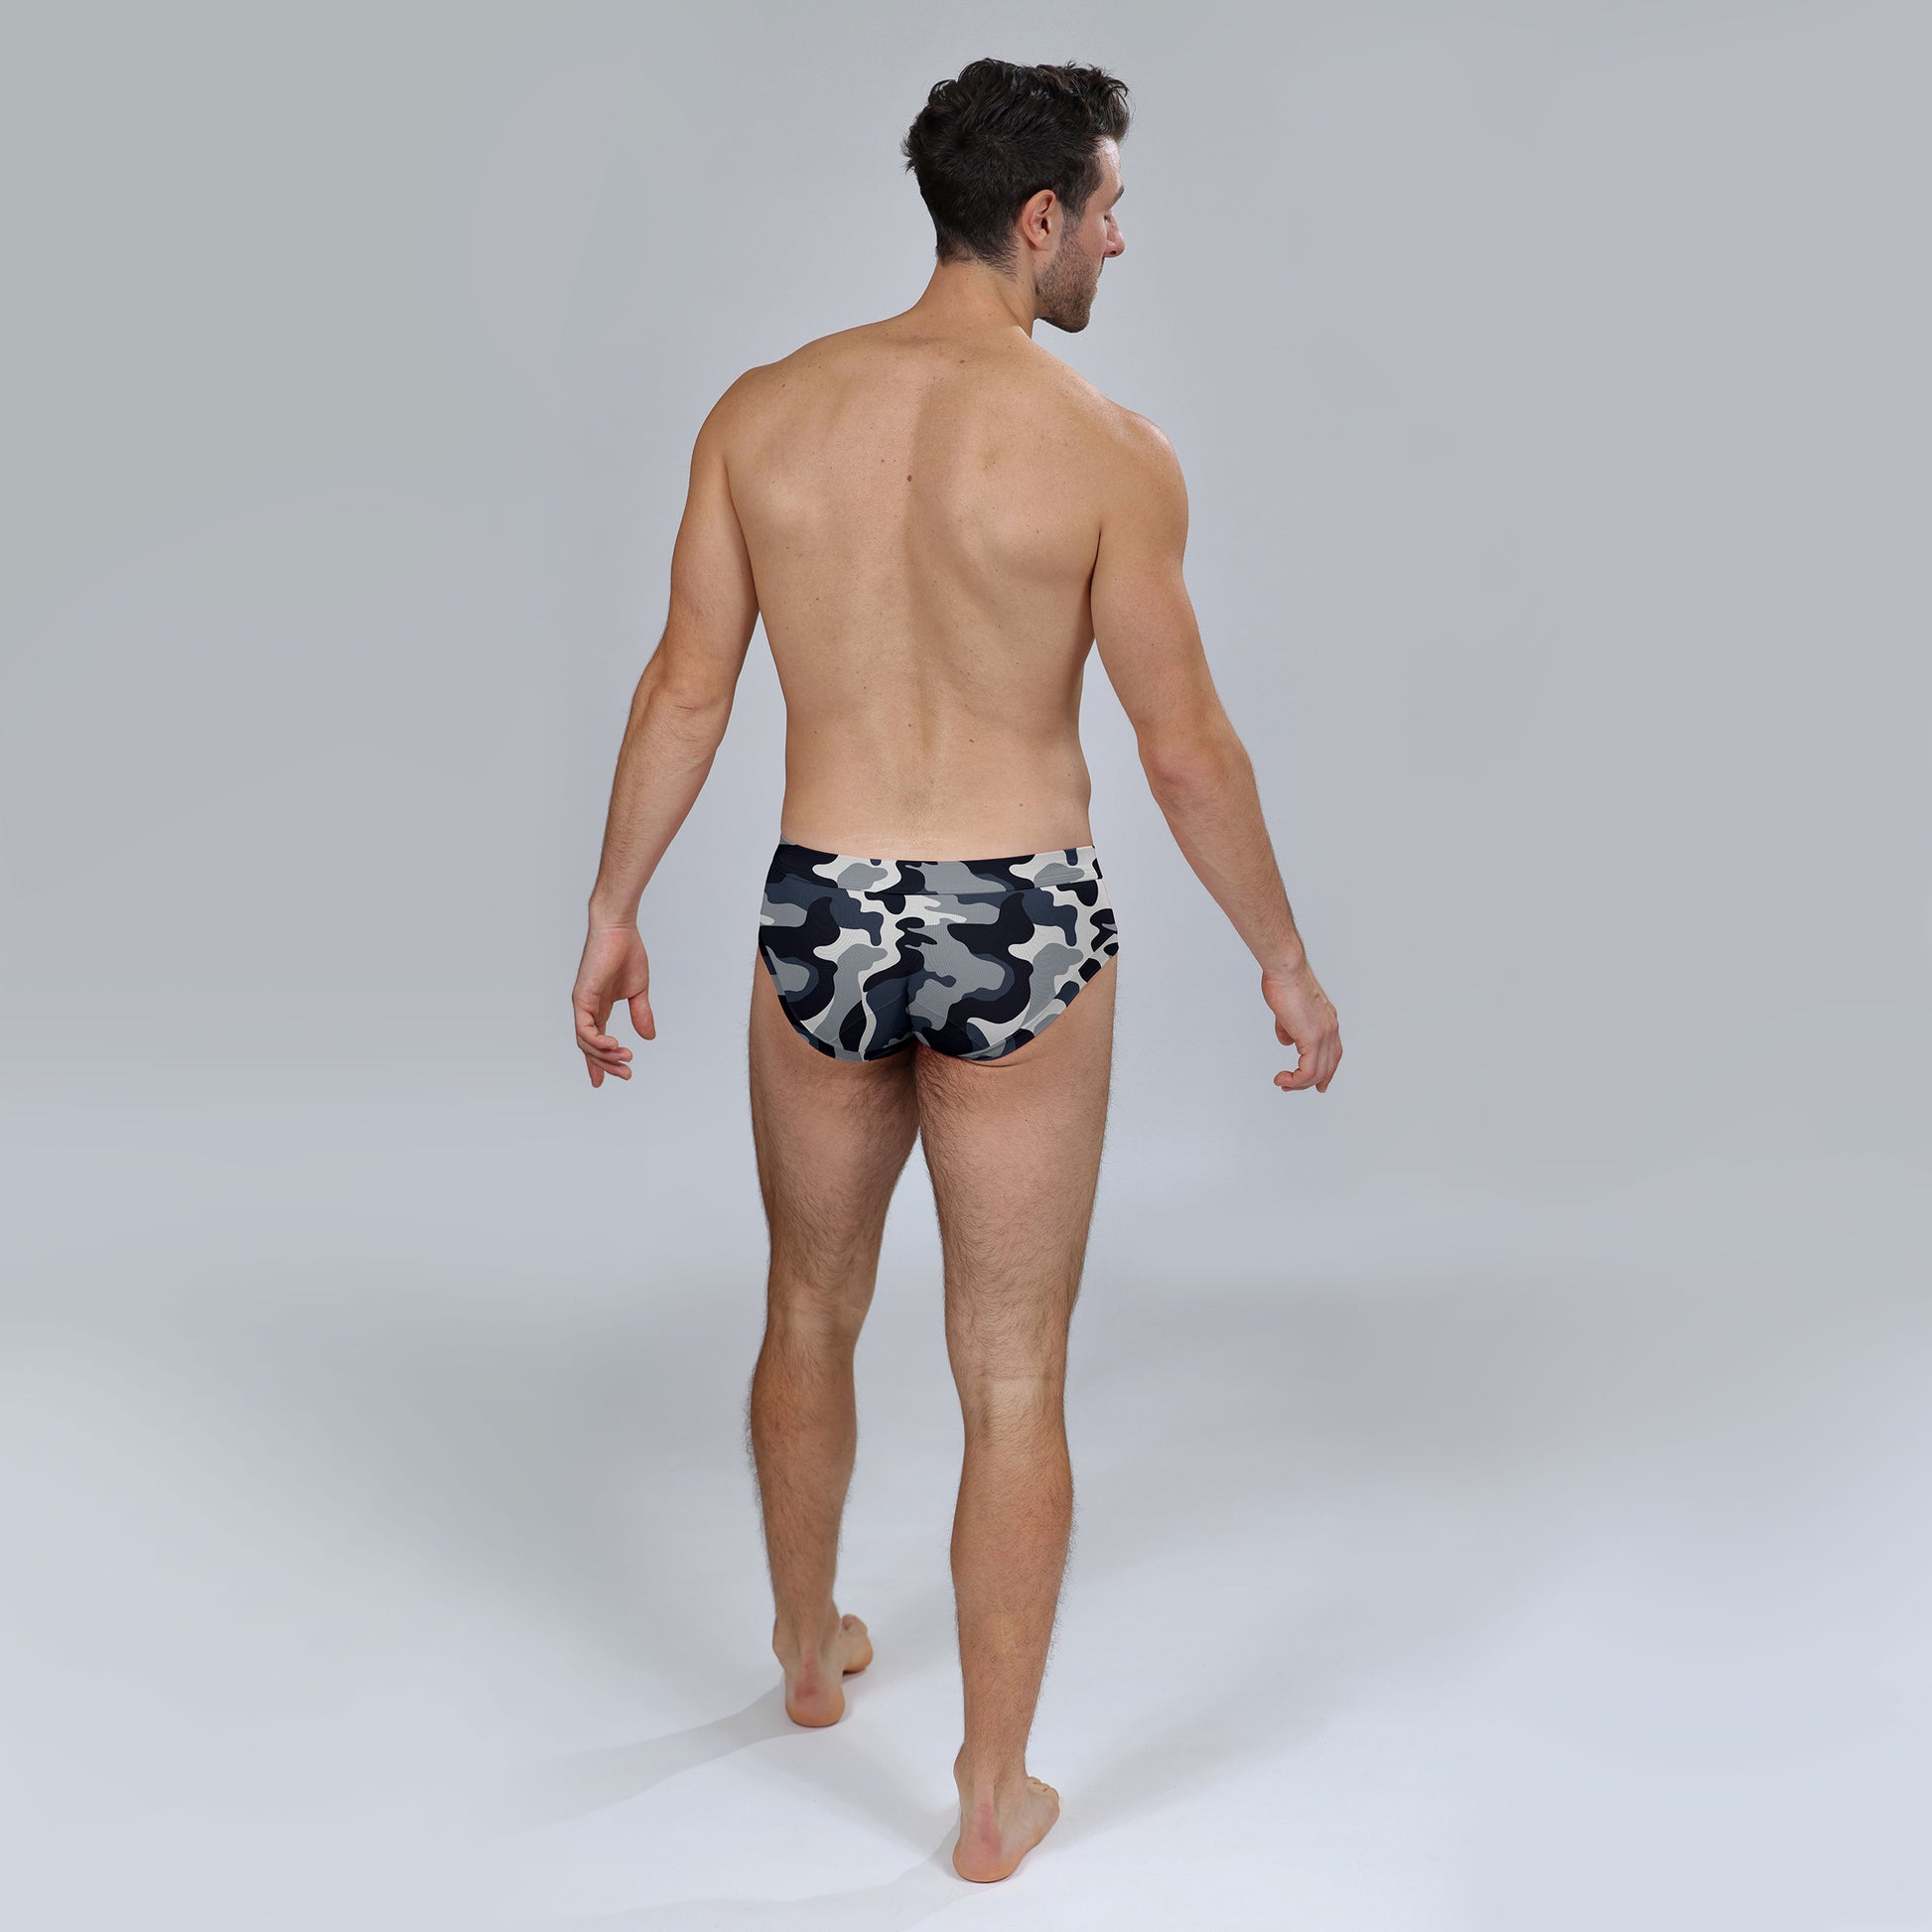 iOPQO underwear For men Military Men's Camouflage Boxer Briefs Trunks  Underwear Underpant CE/L Camouflage + L